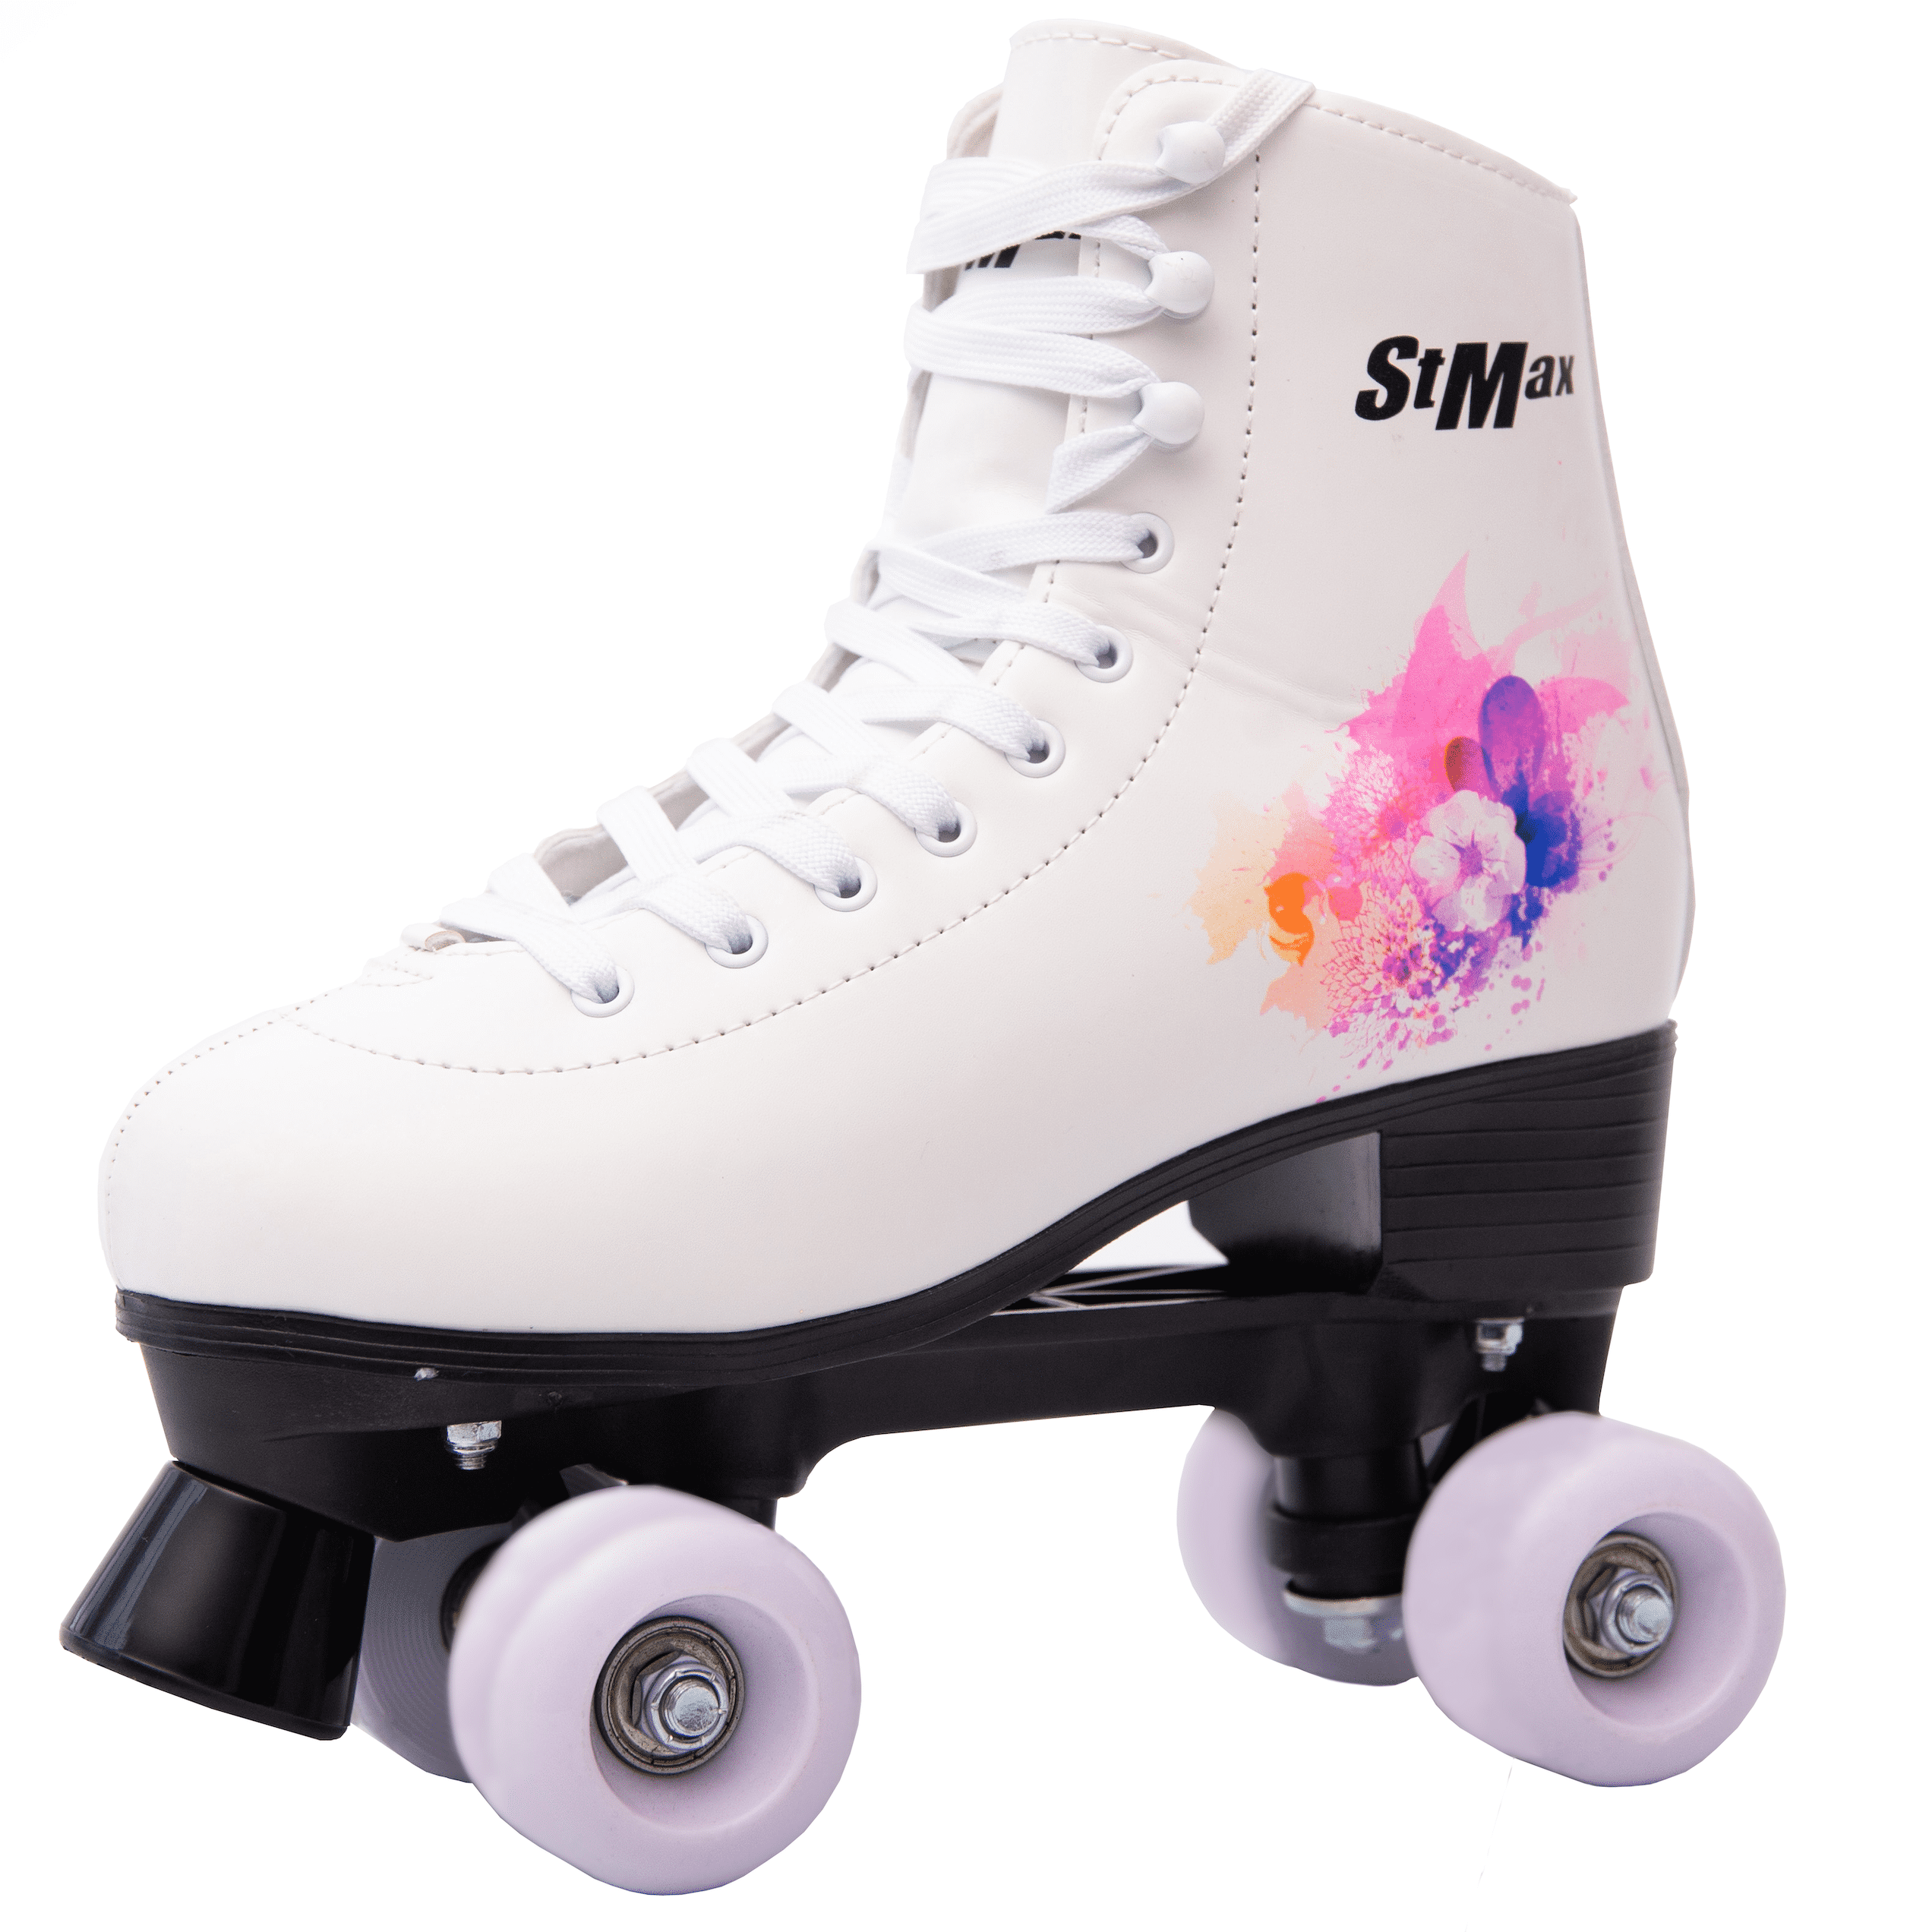 Skates for Women Size 7 Quad Derby Pink Purple Flower Adult STMAX 